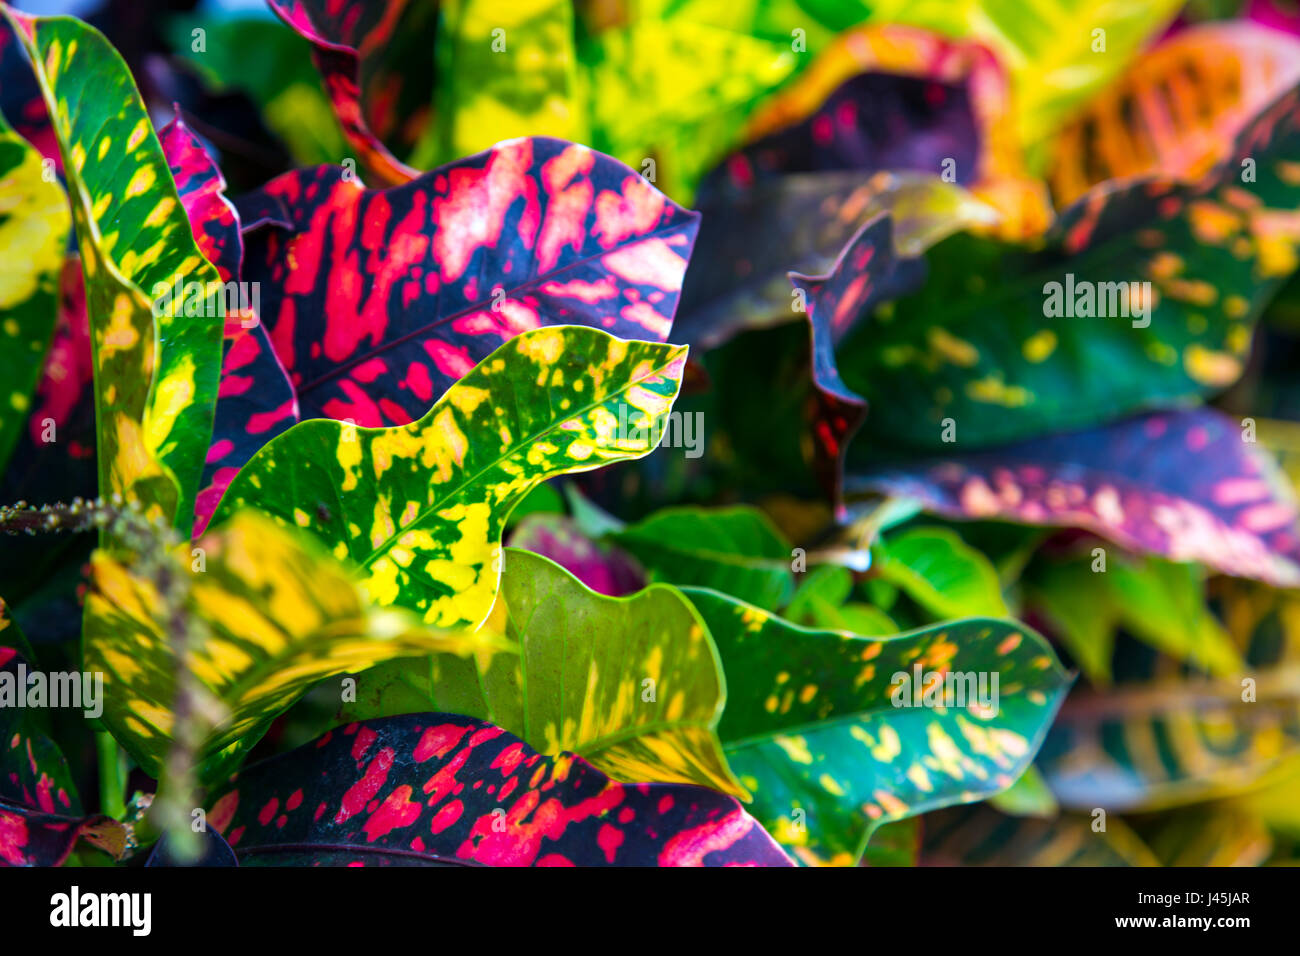 Garden croton plant leaves background Stock Photo